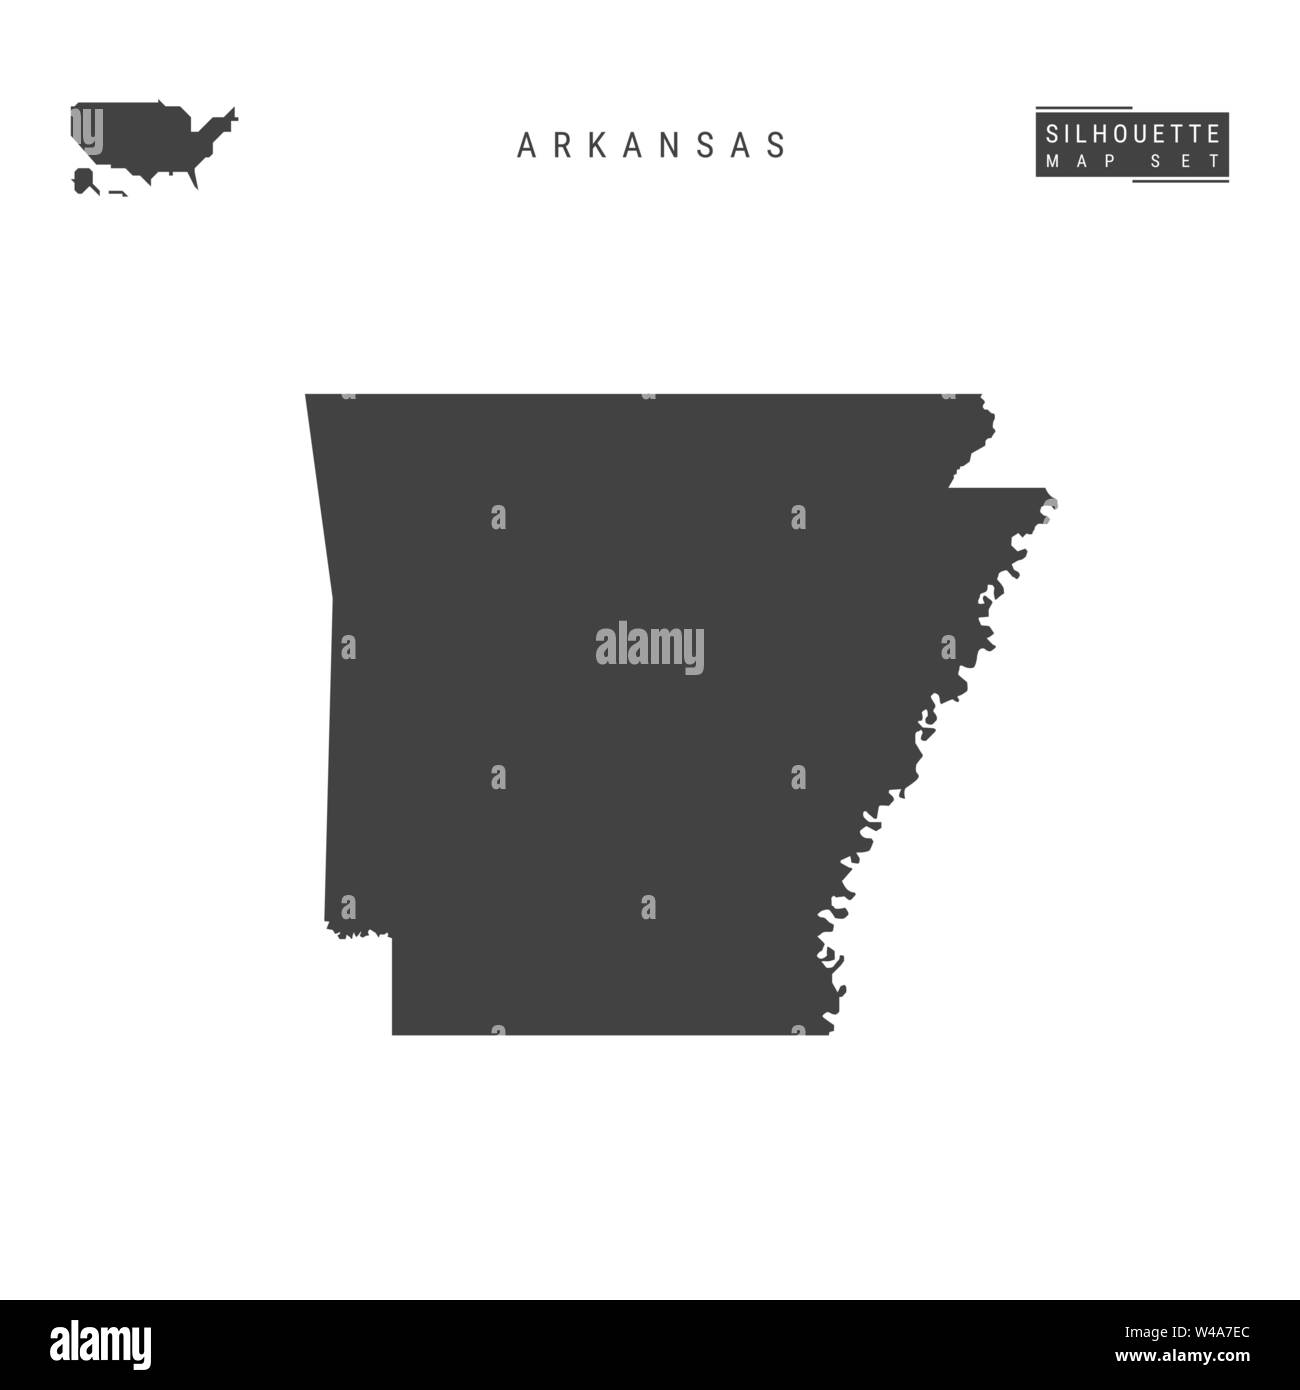 Arkansas US State Blank Vector Map Isolated on White Background. High-Detailed Black Silhouette Map of Arkansas. Stock Vector